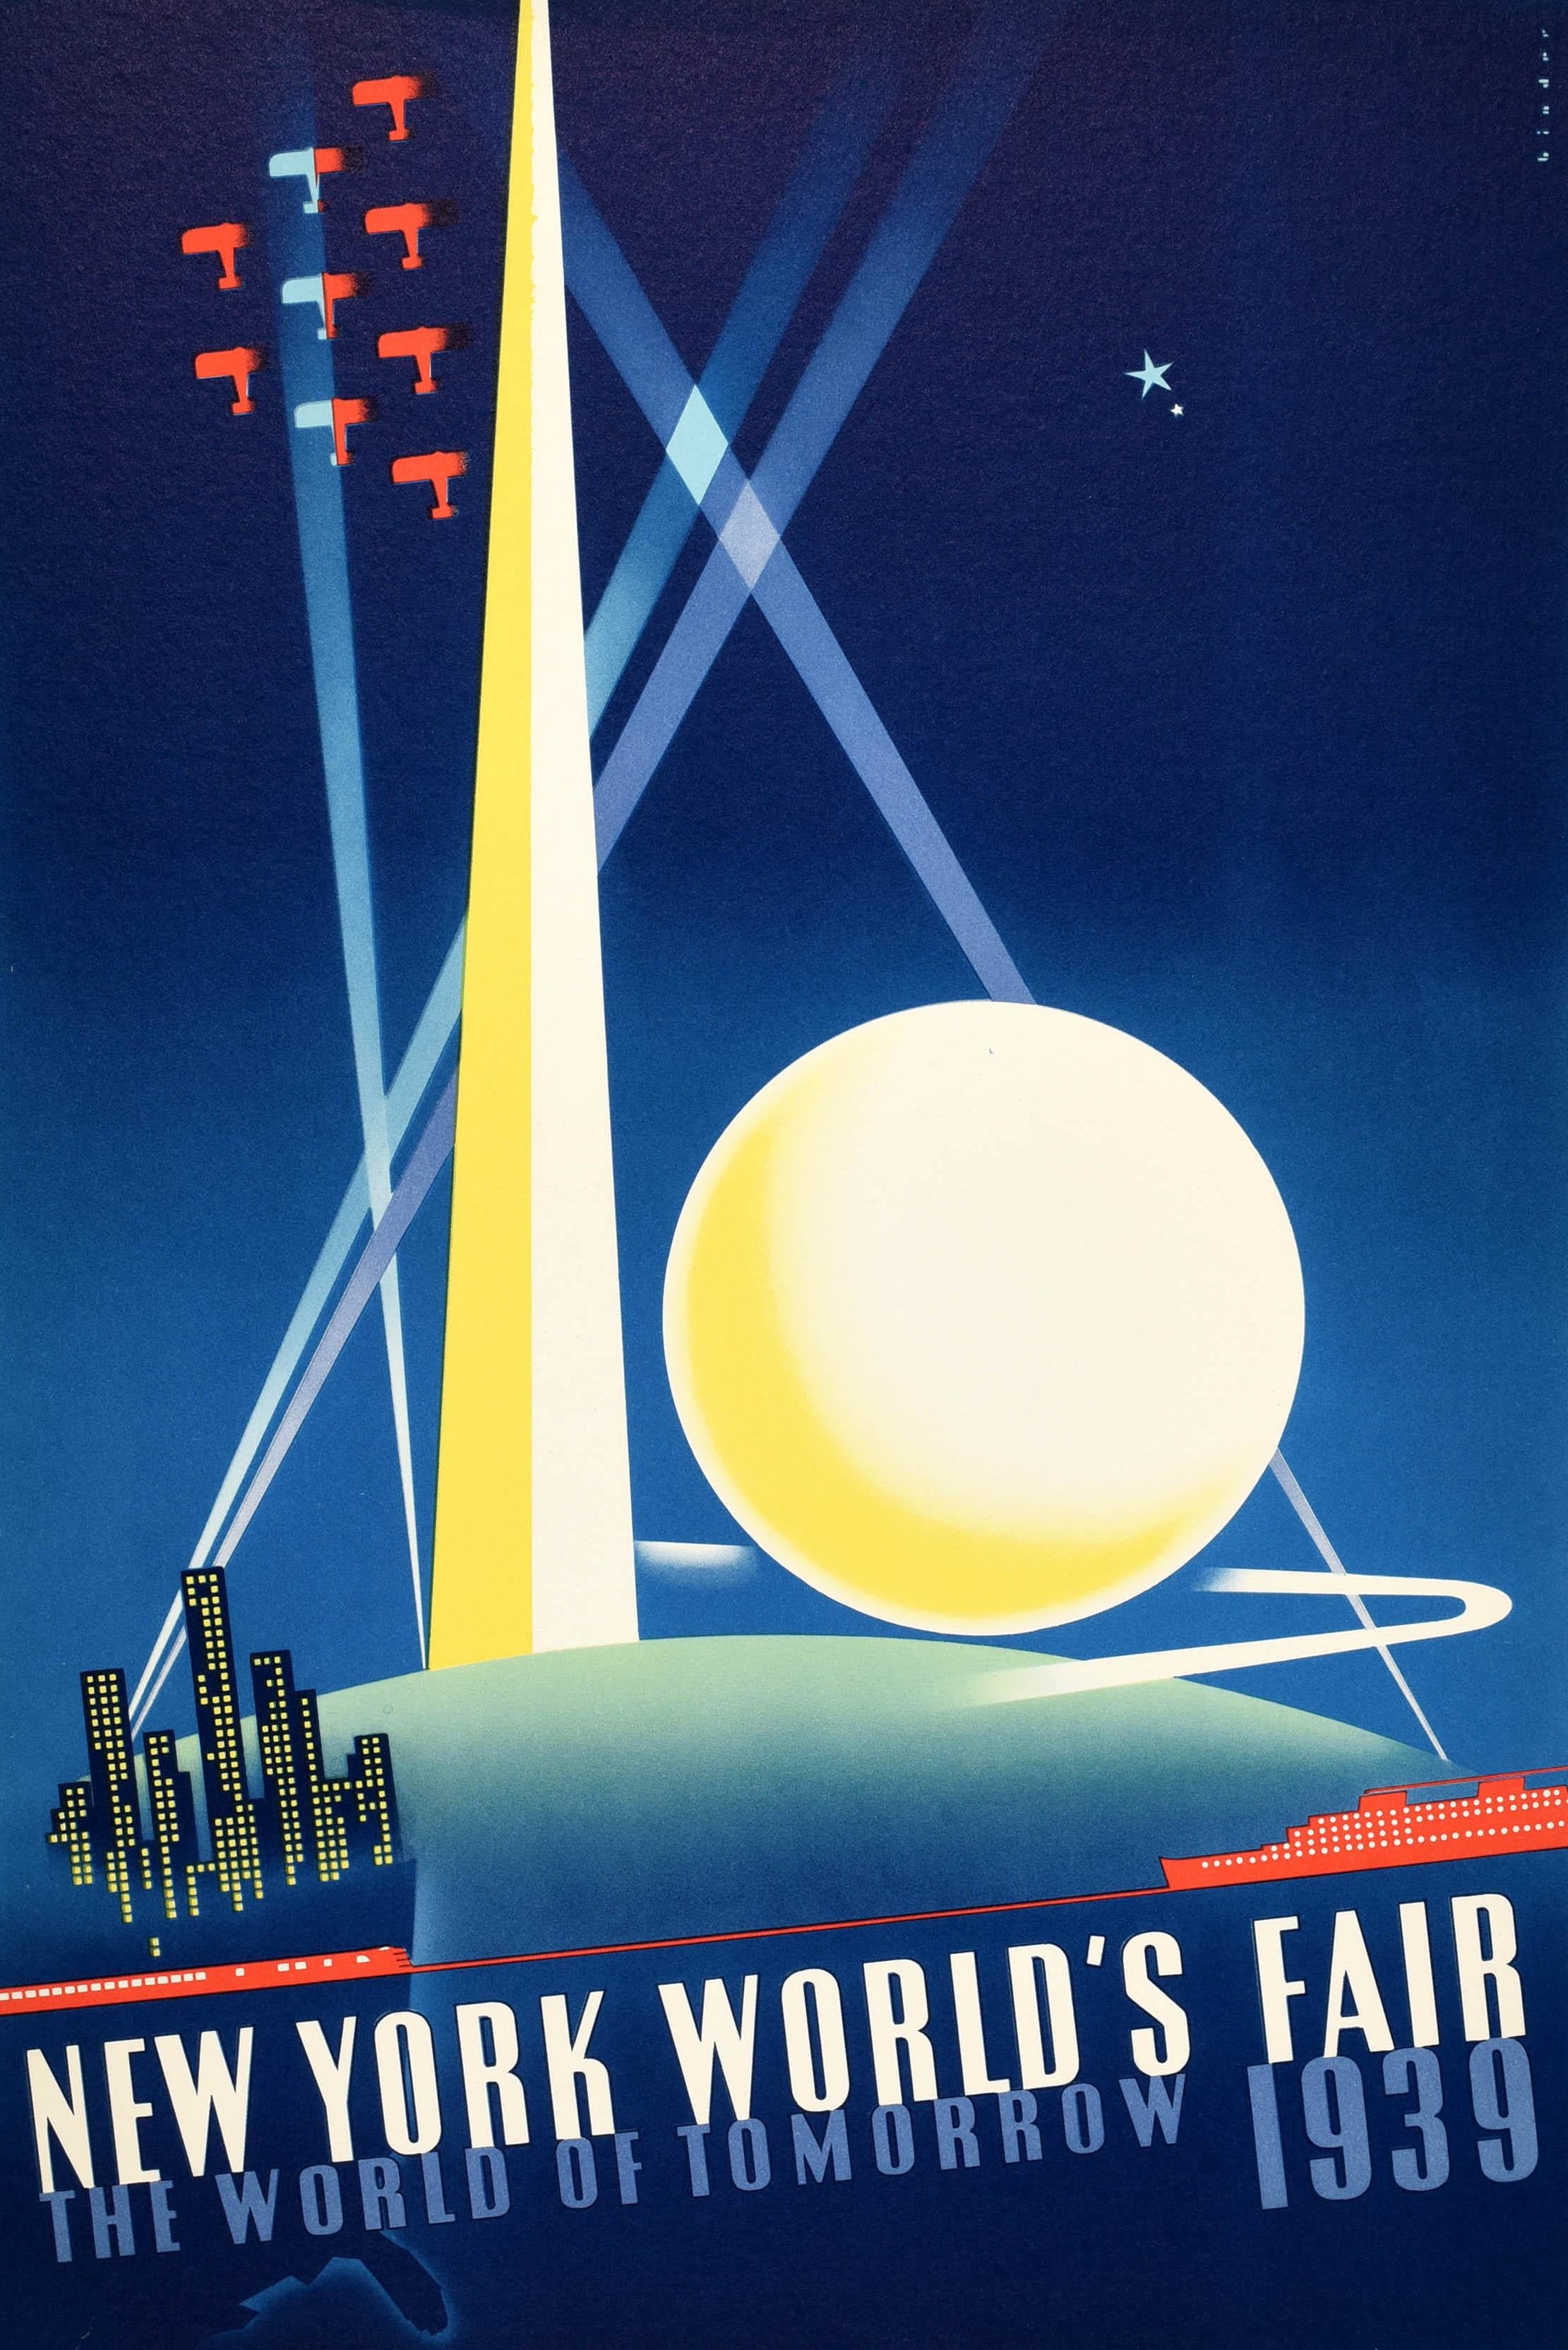 Original Vintage Travel Advertising Poster New York Worlds Fair Binder Art Deco - Print by Joseph Binder